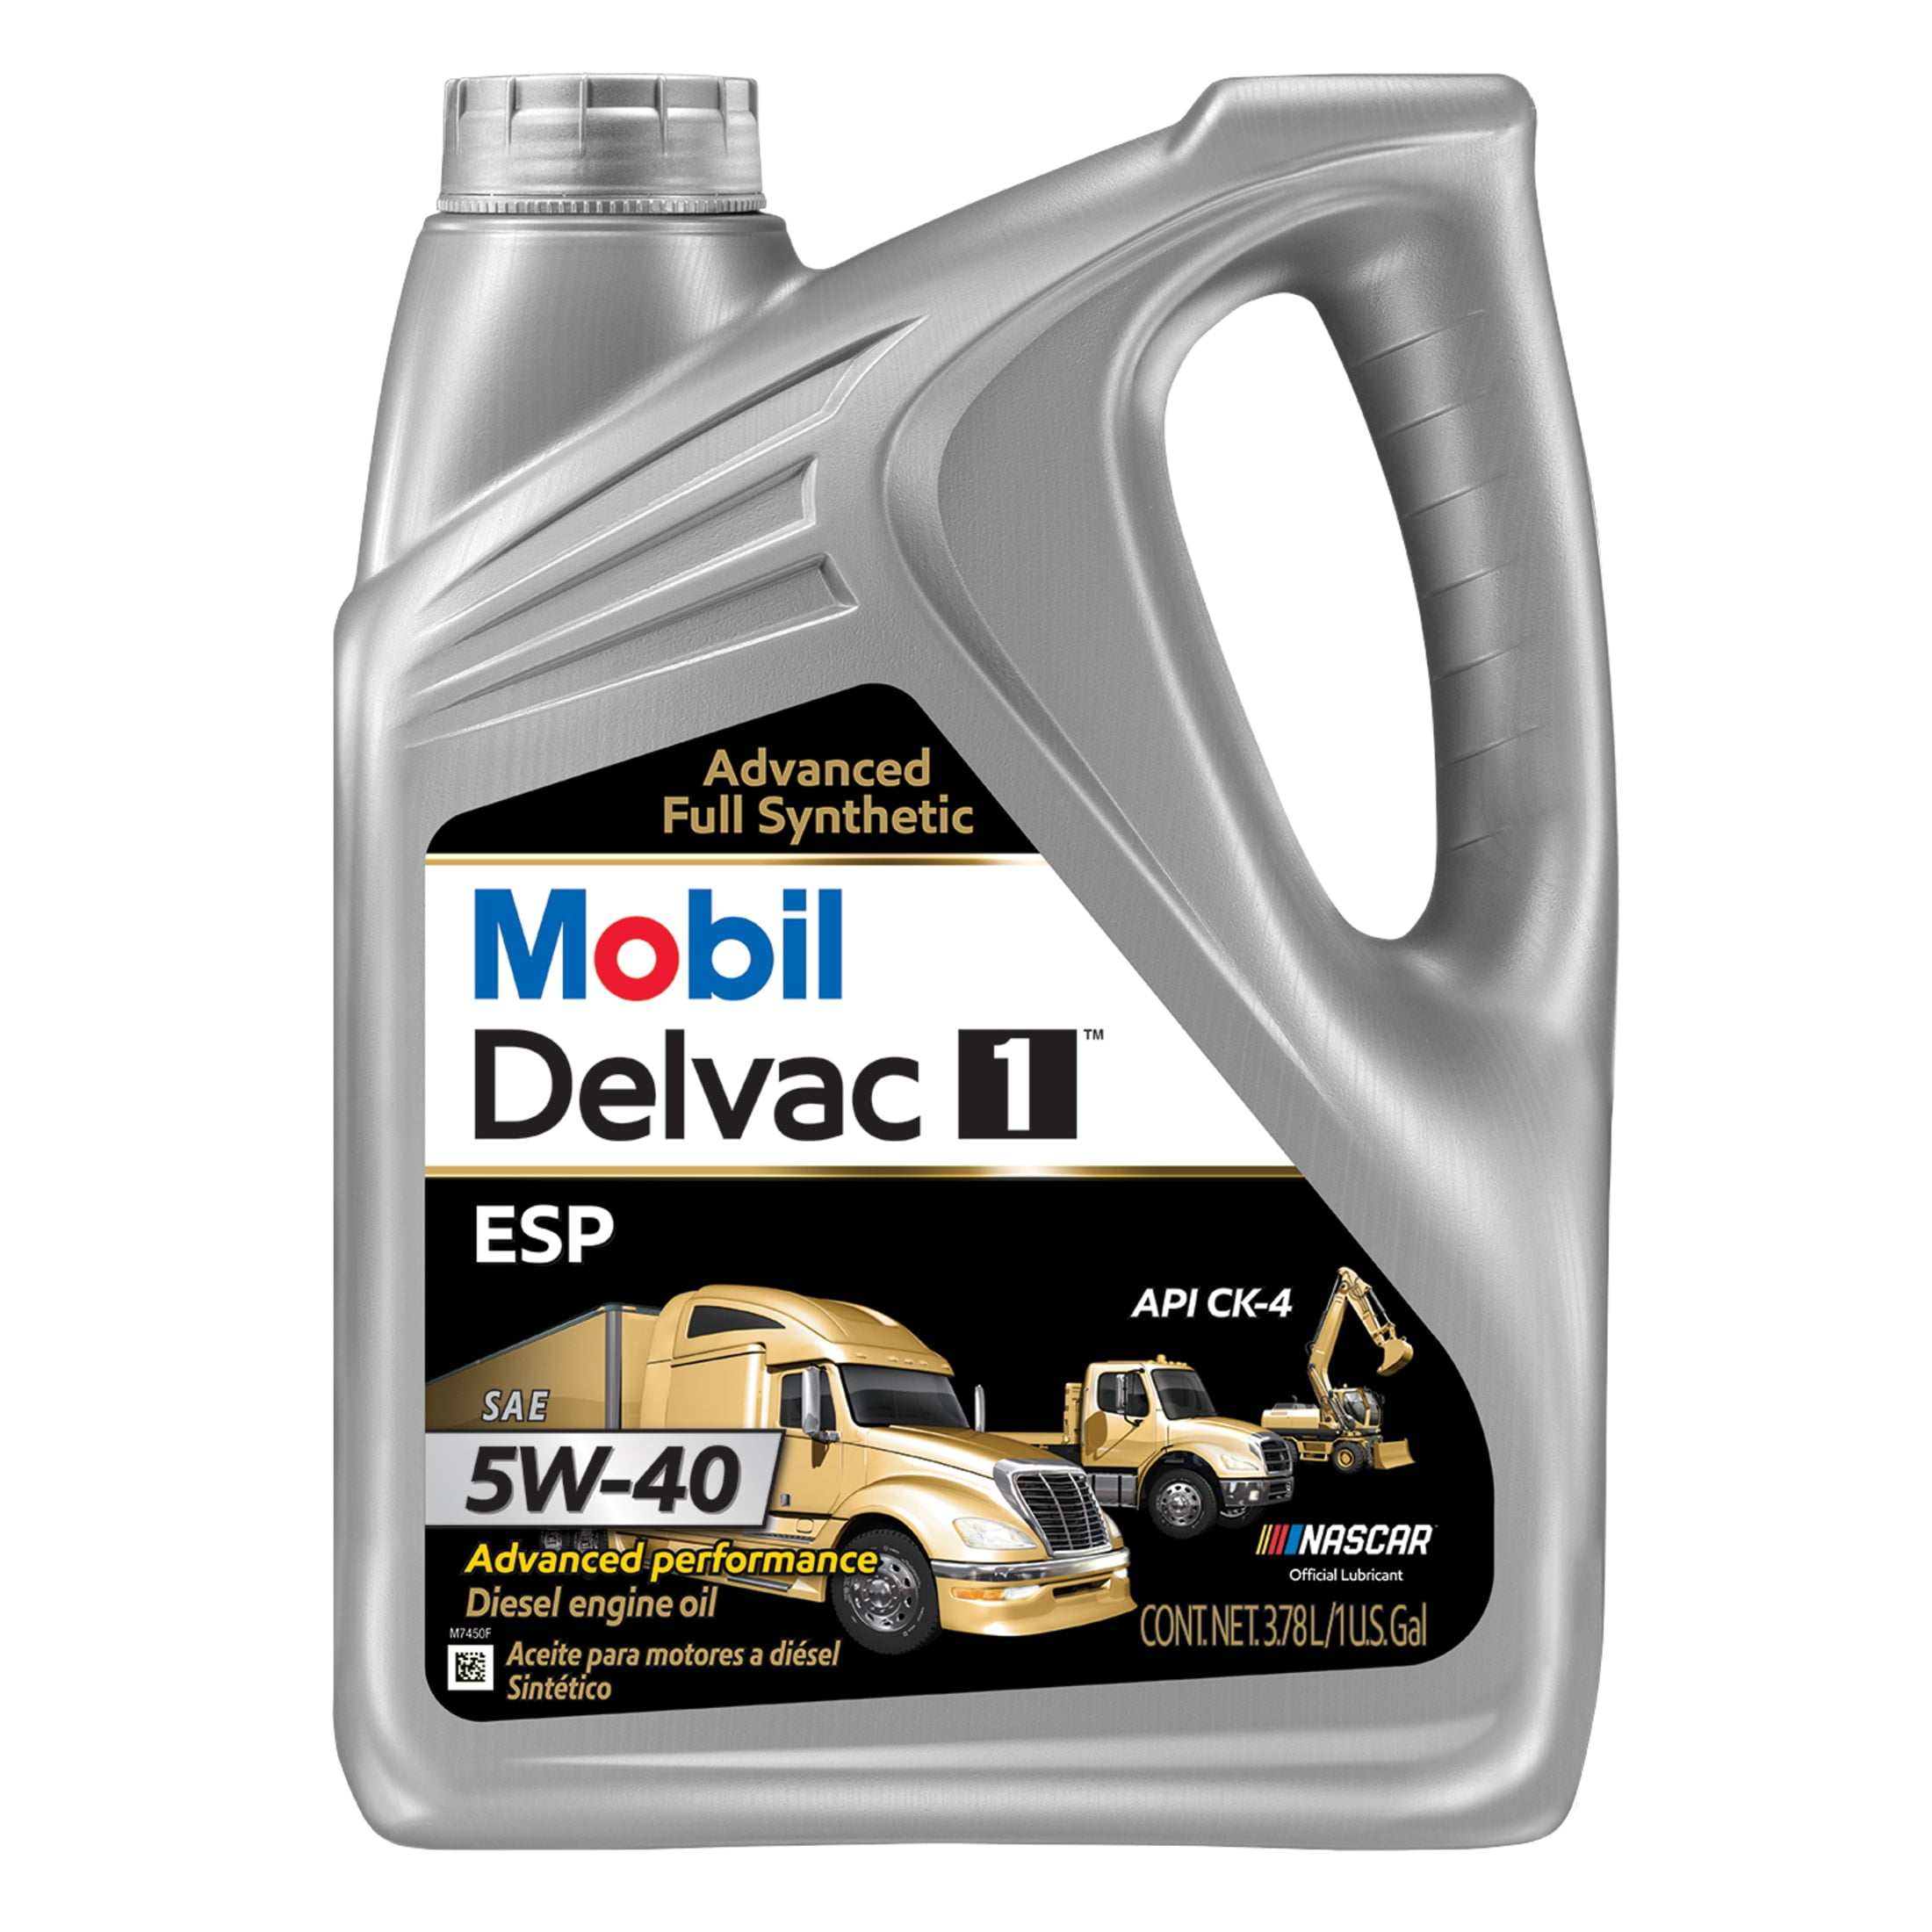 Mobil Delvac 1 ESP Heavy Duty Full Synthetic Diesel Engine Oil 5W-40, 1  Gallon 